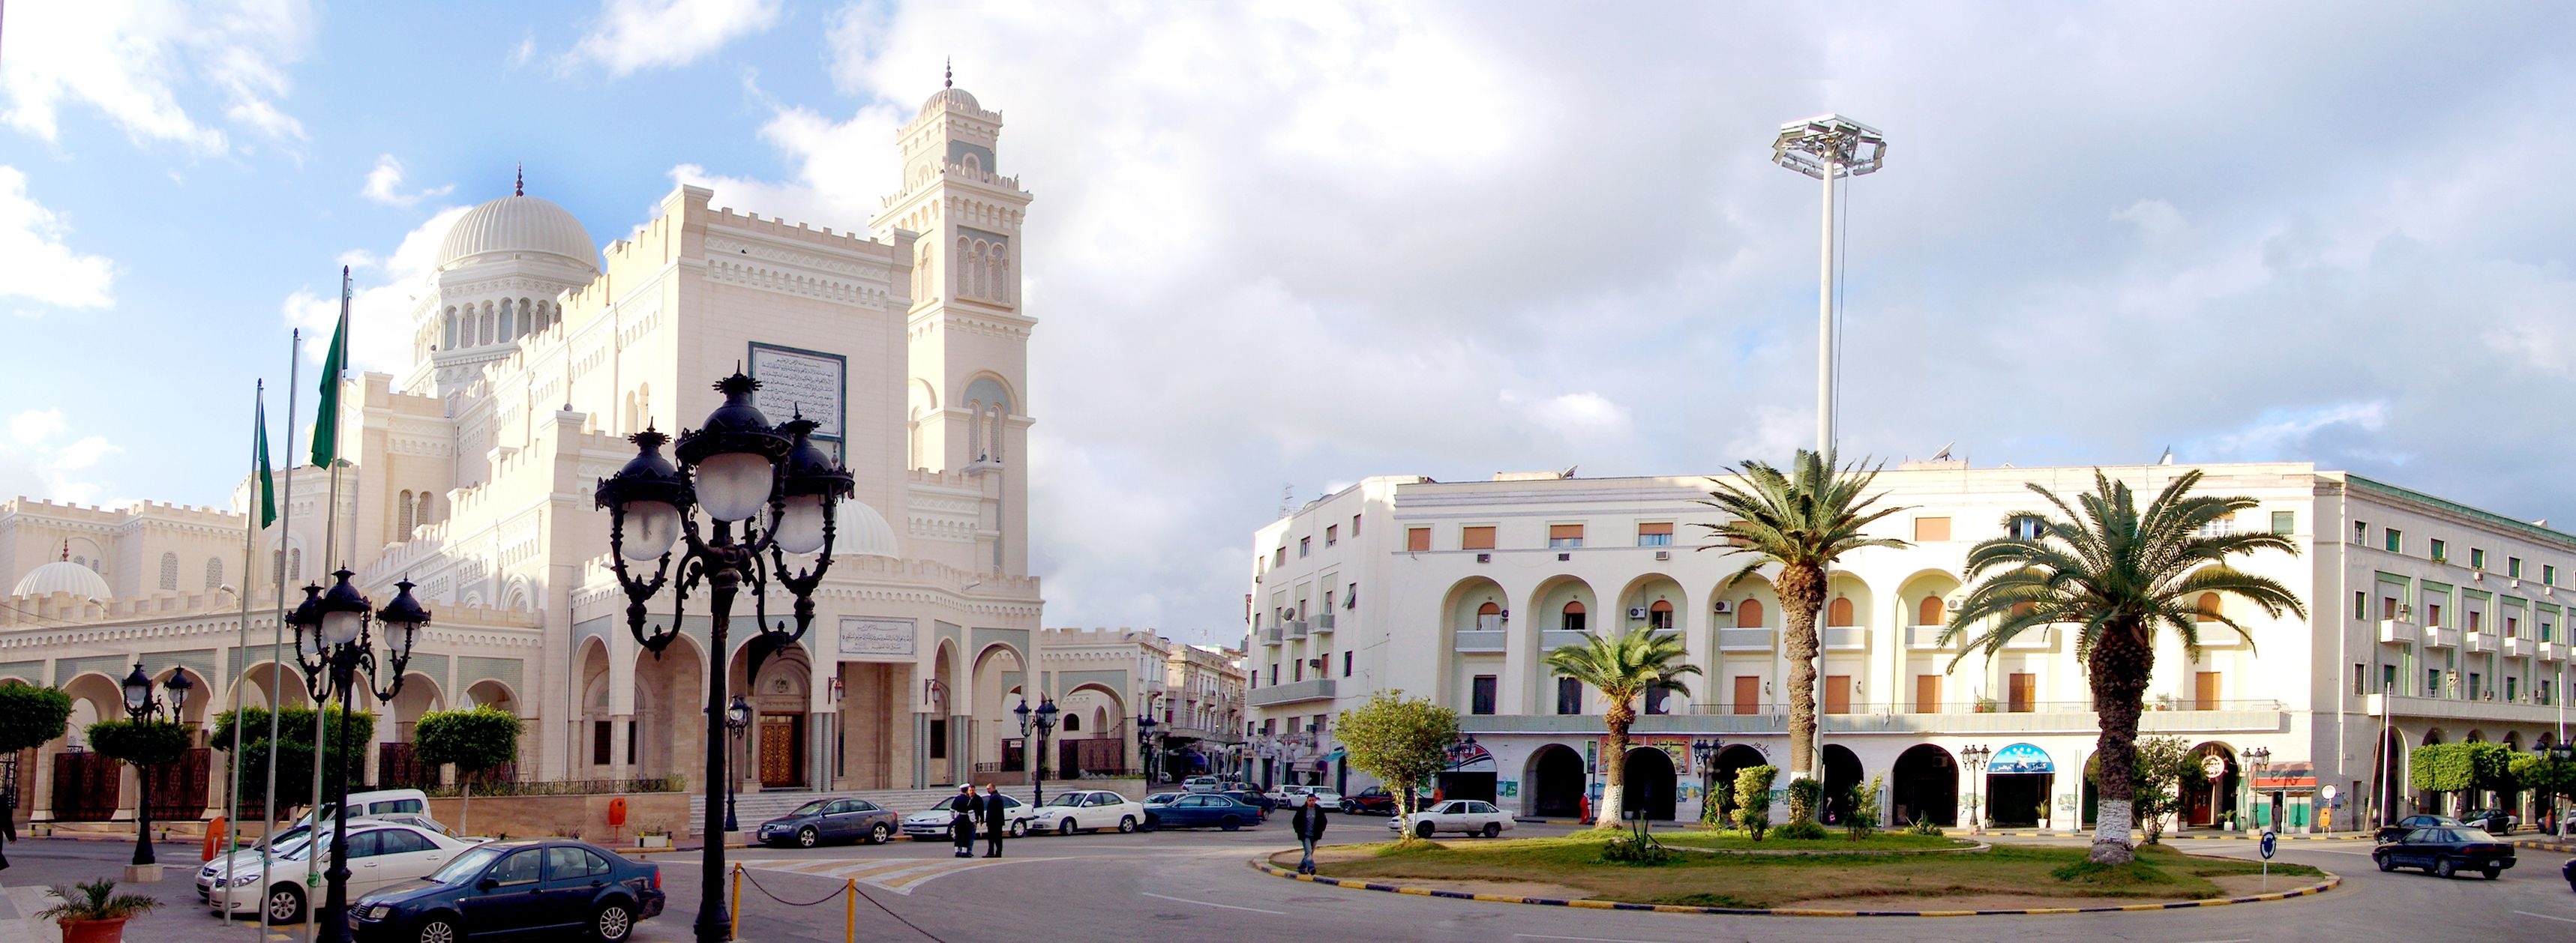 Libya Travels, Algeria Square, Tripoli panorama, Urban charm, 3440x1260 Dual Screen Desktop